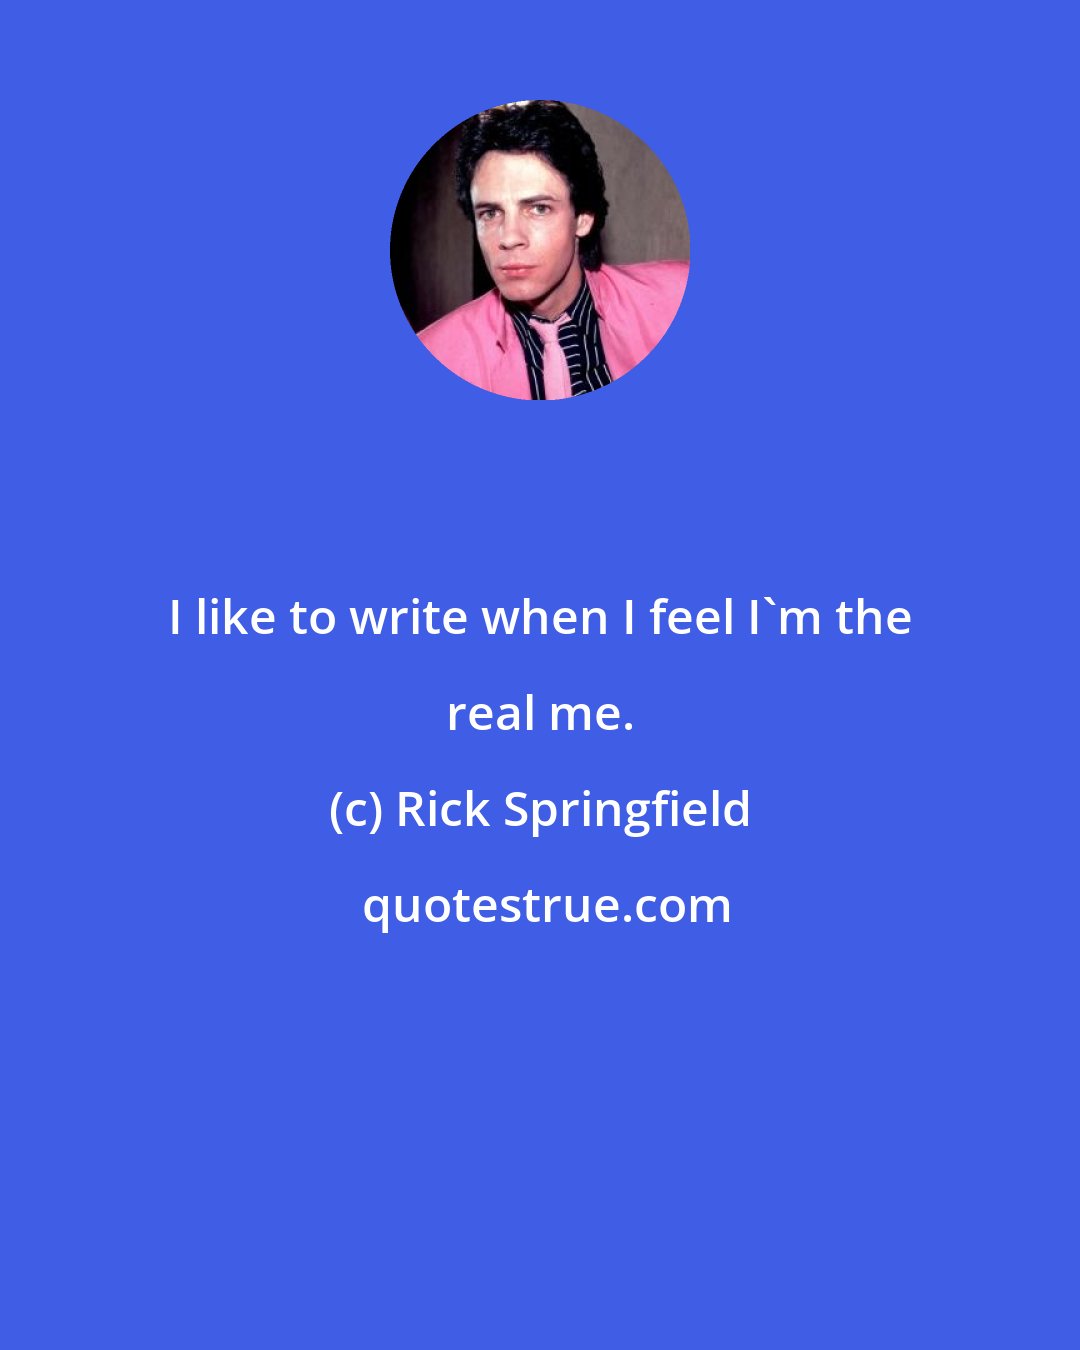 Rick Springfield: I like to write when I feel I'm the real me.